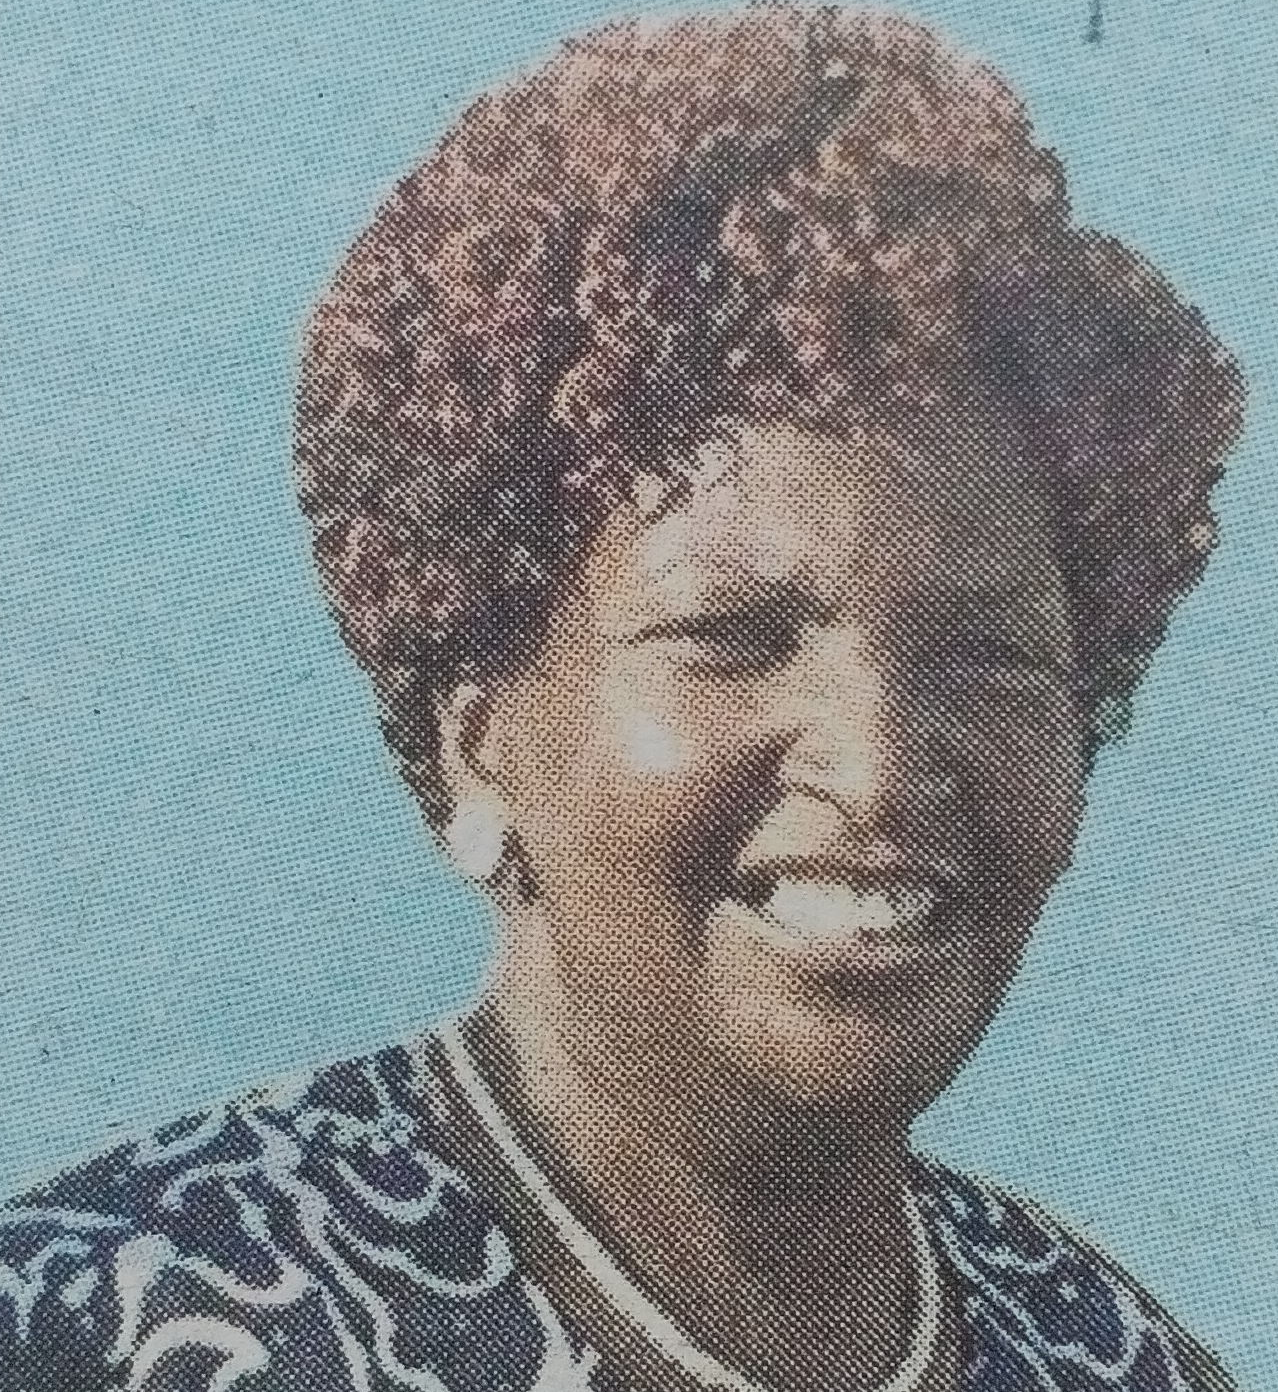 Obituary Image of Dolly Musenya Kitonga